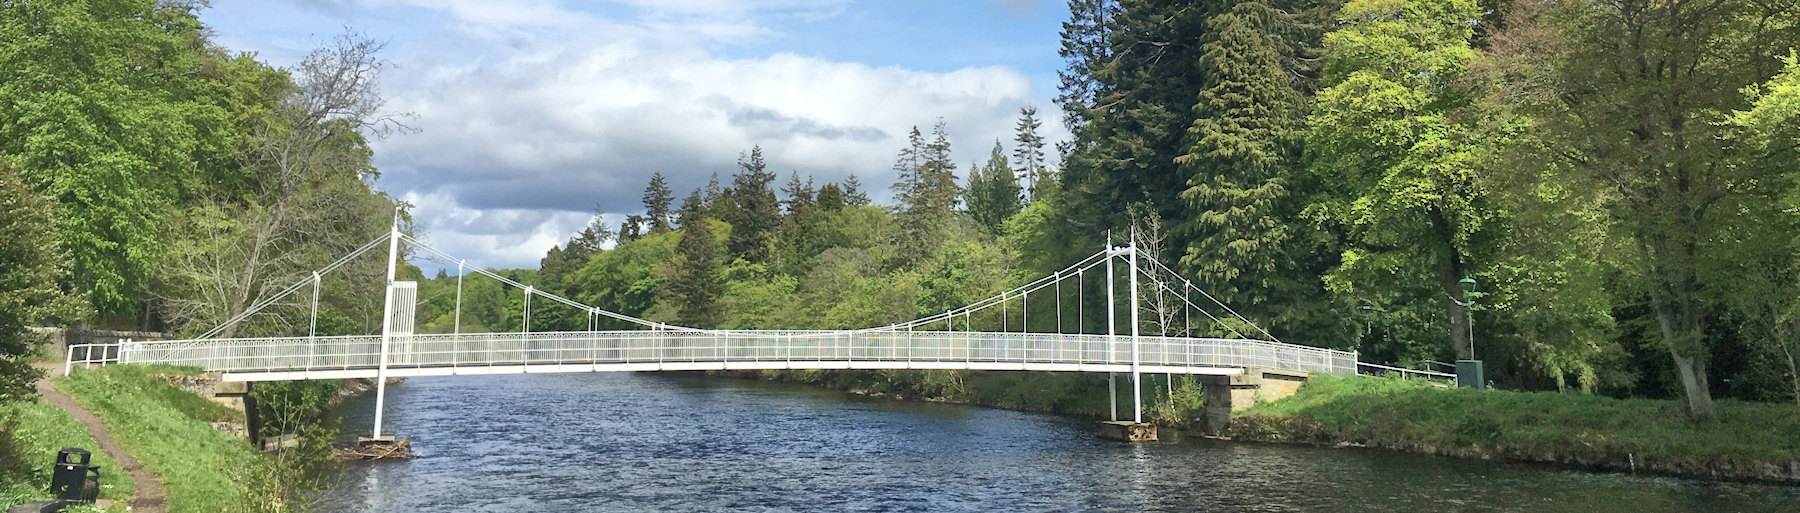 Bridge at the Ness Islands, Inverness